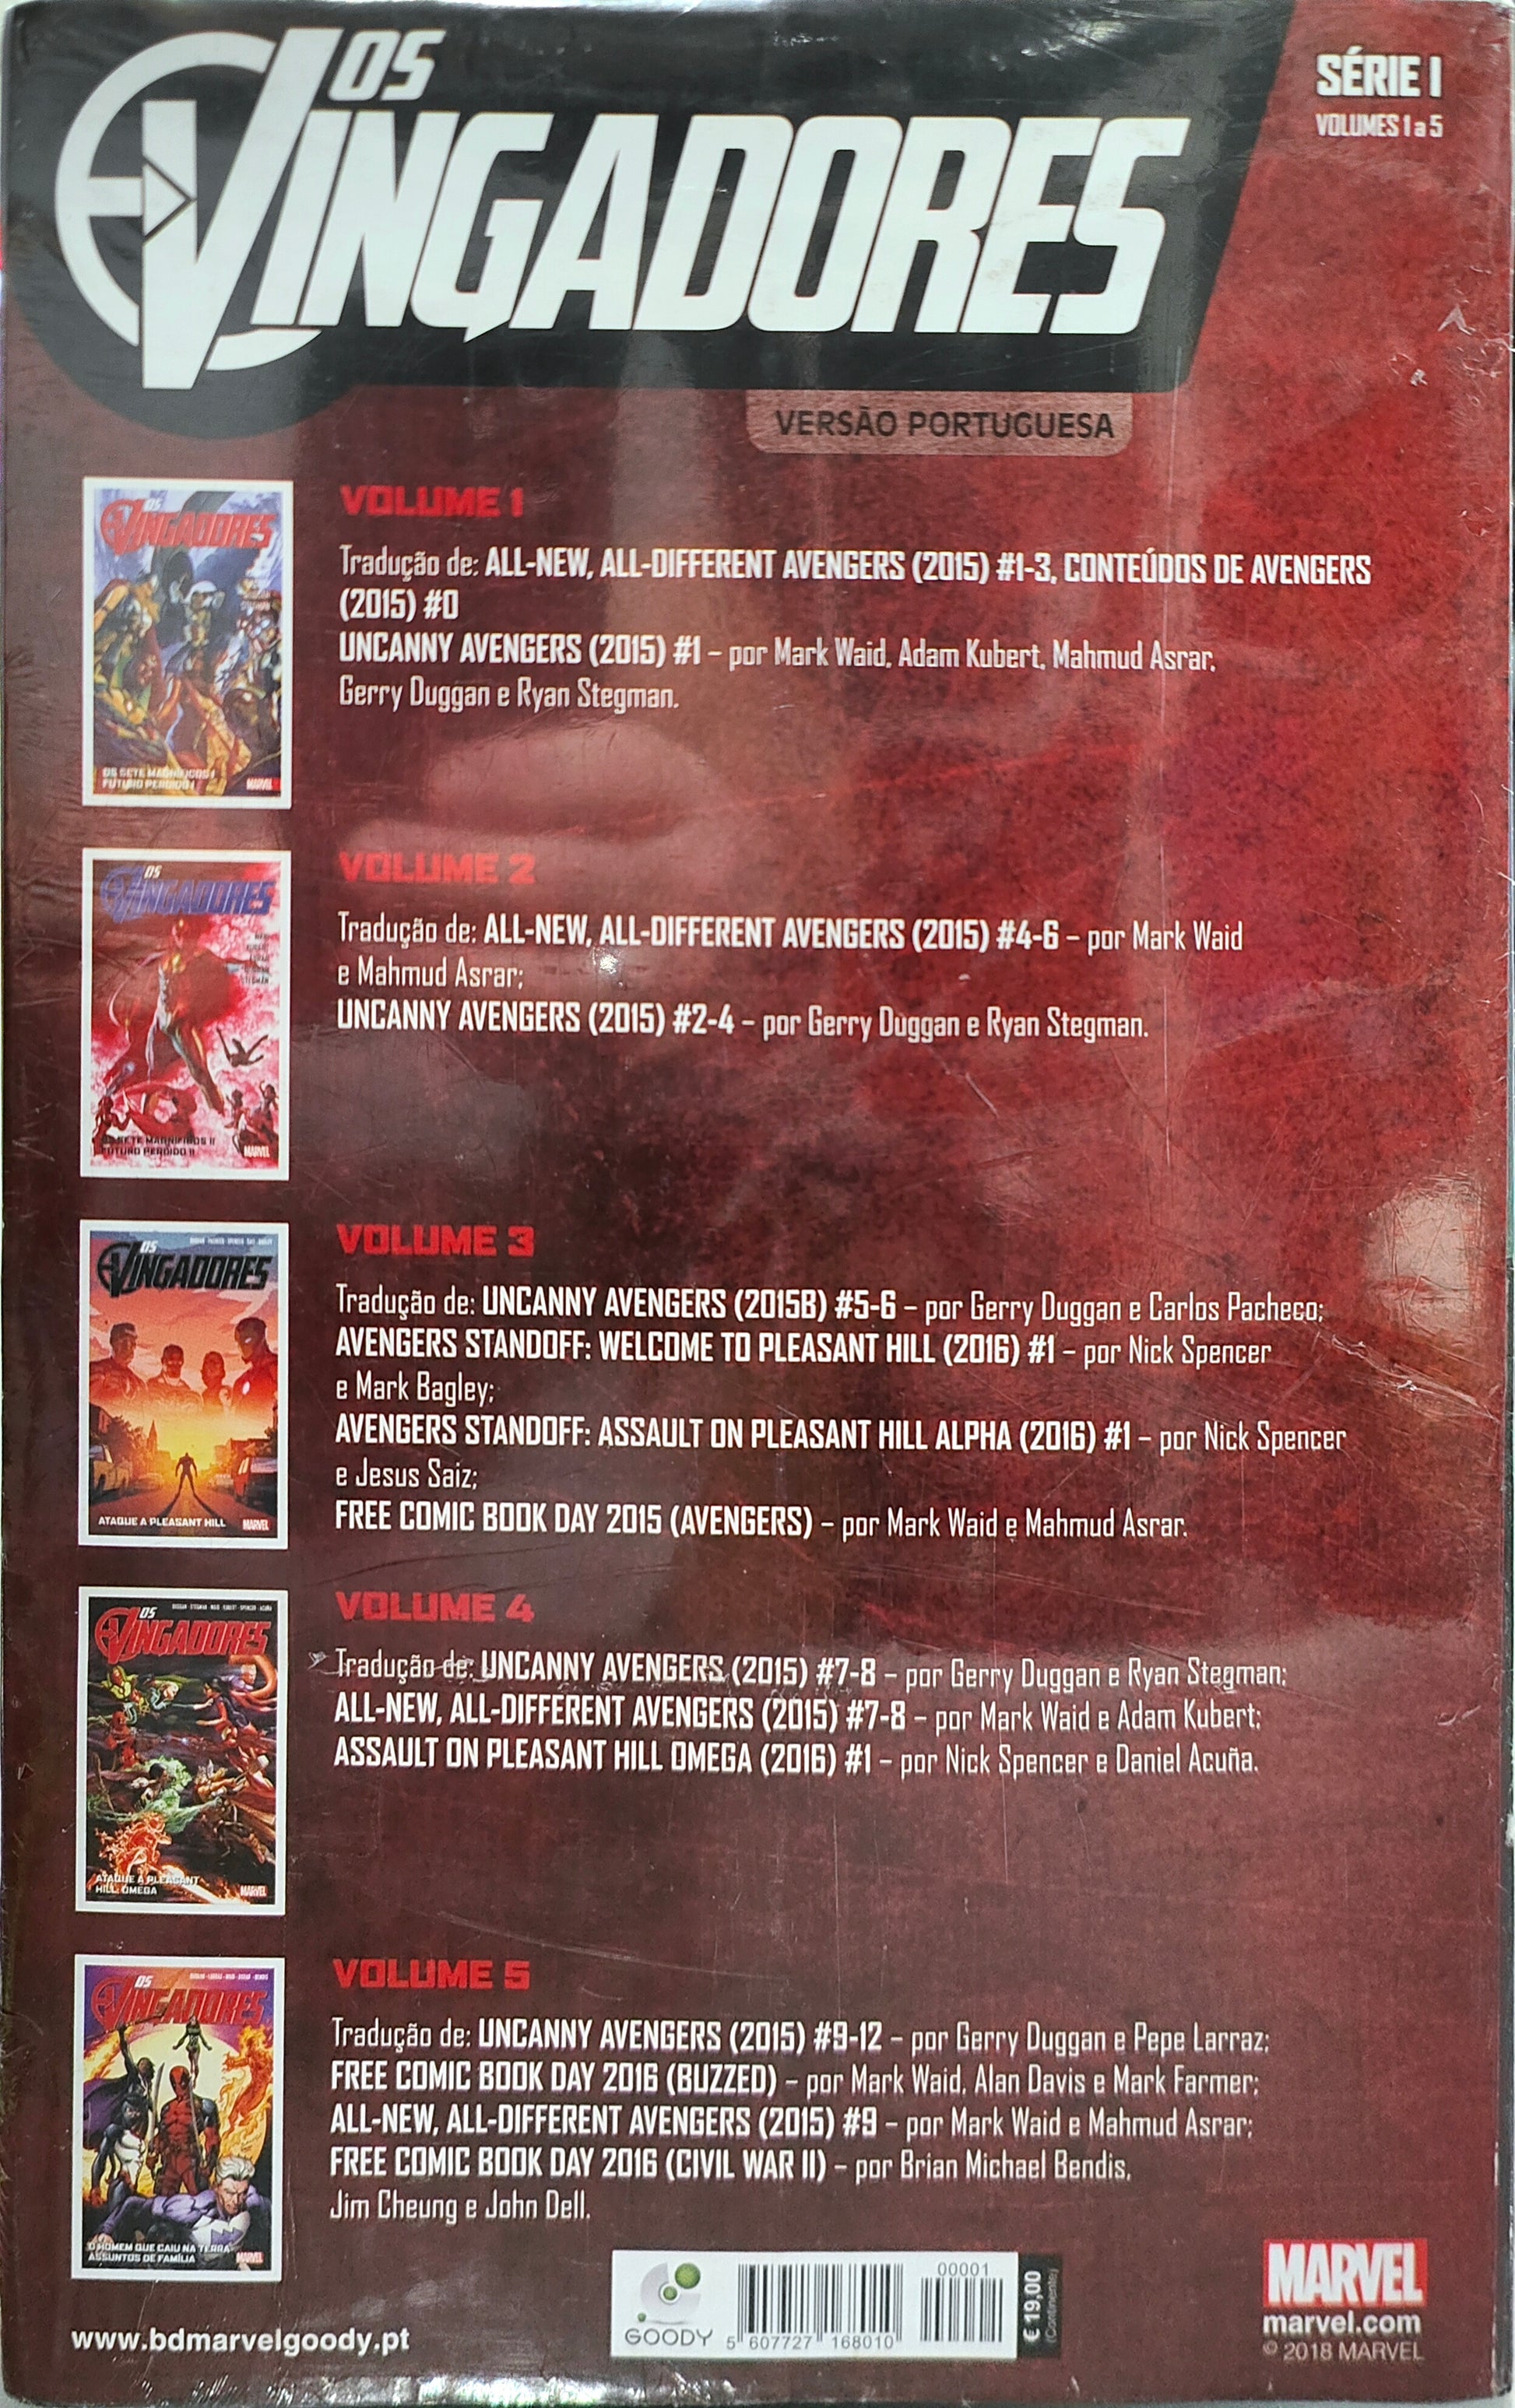 Marvel Vingadores Serie 1 5 Volumes - NOVO